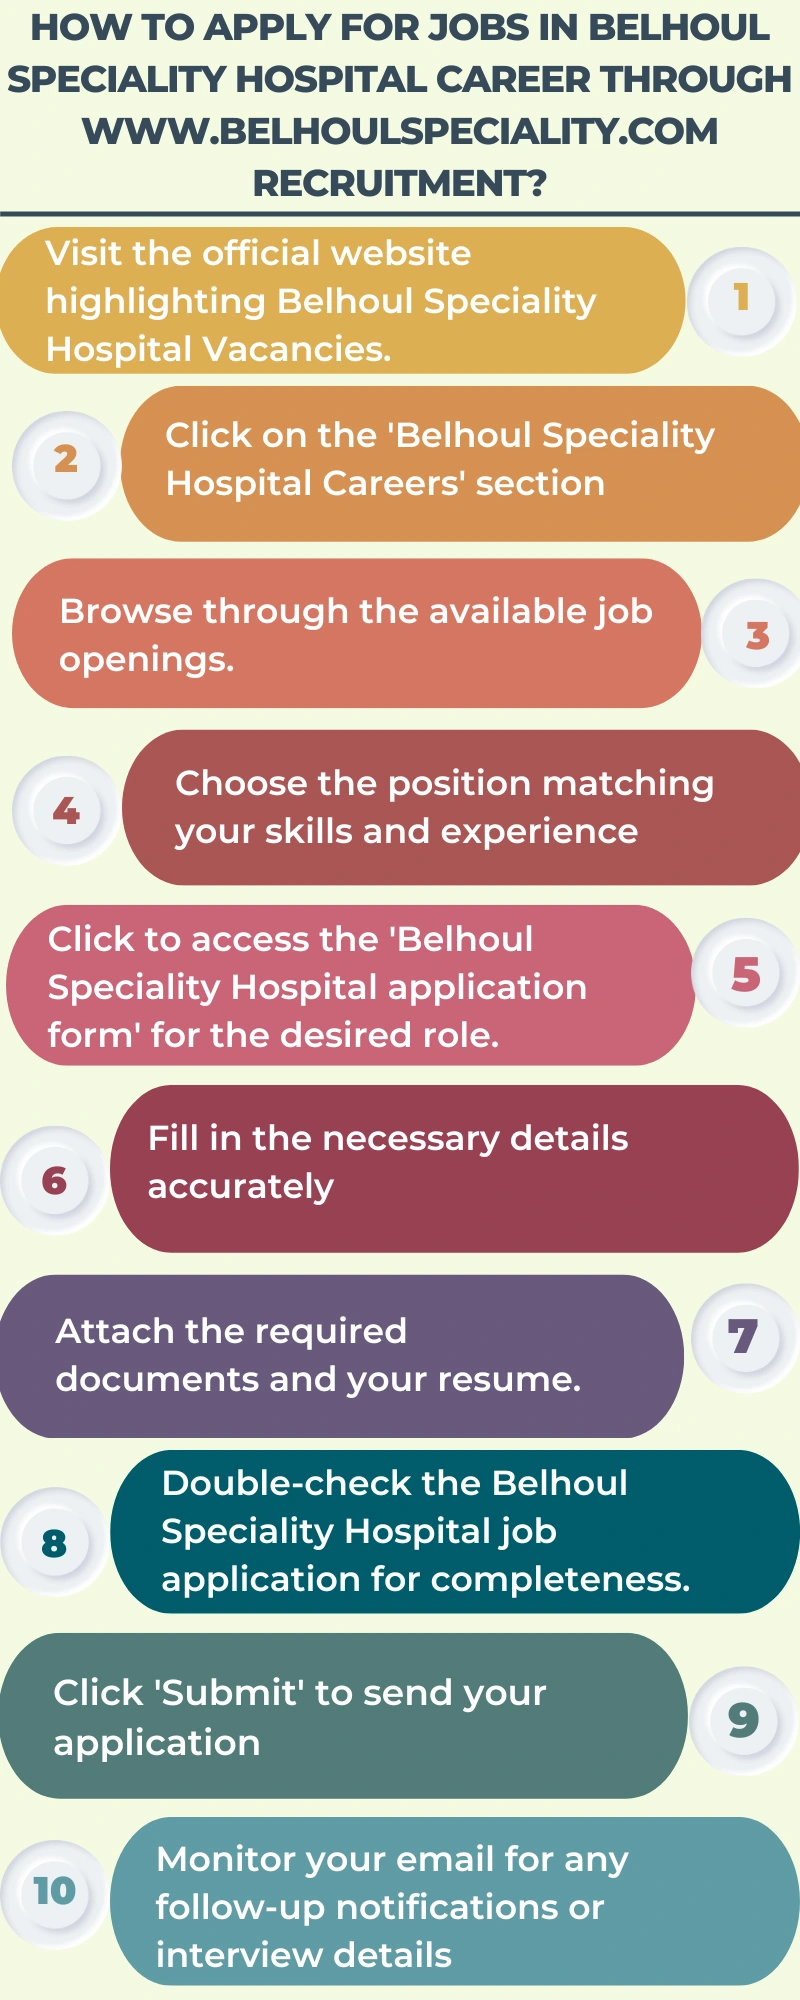 How to Apply for Jobs in Belhoul Speciality Hospital Career through www.belhoulspeciality.com recruitment?